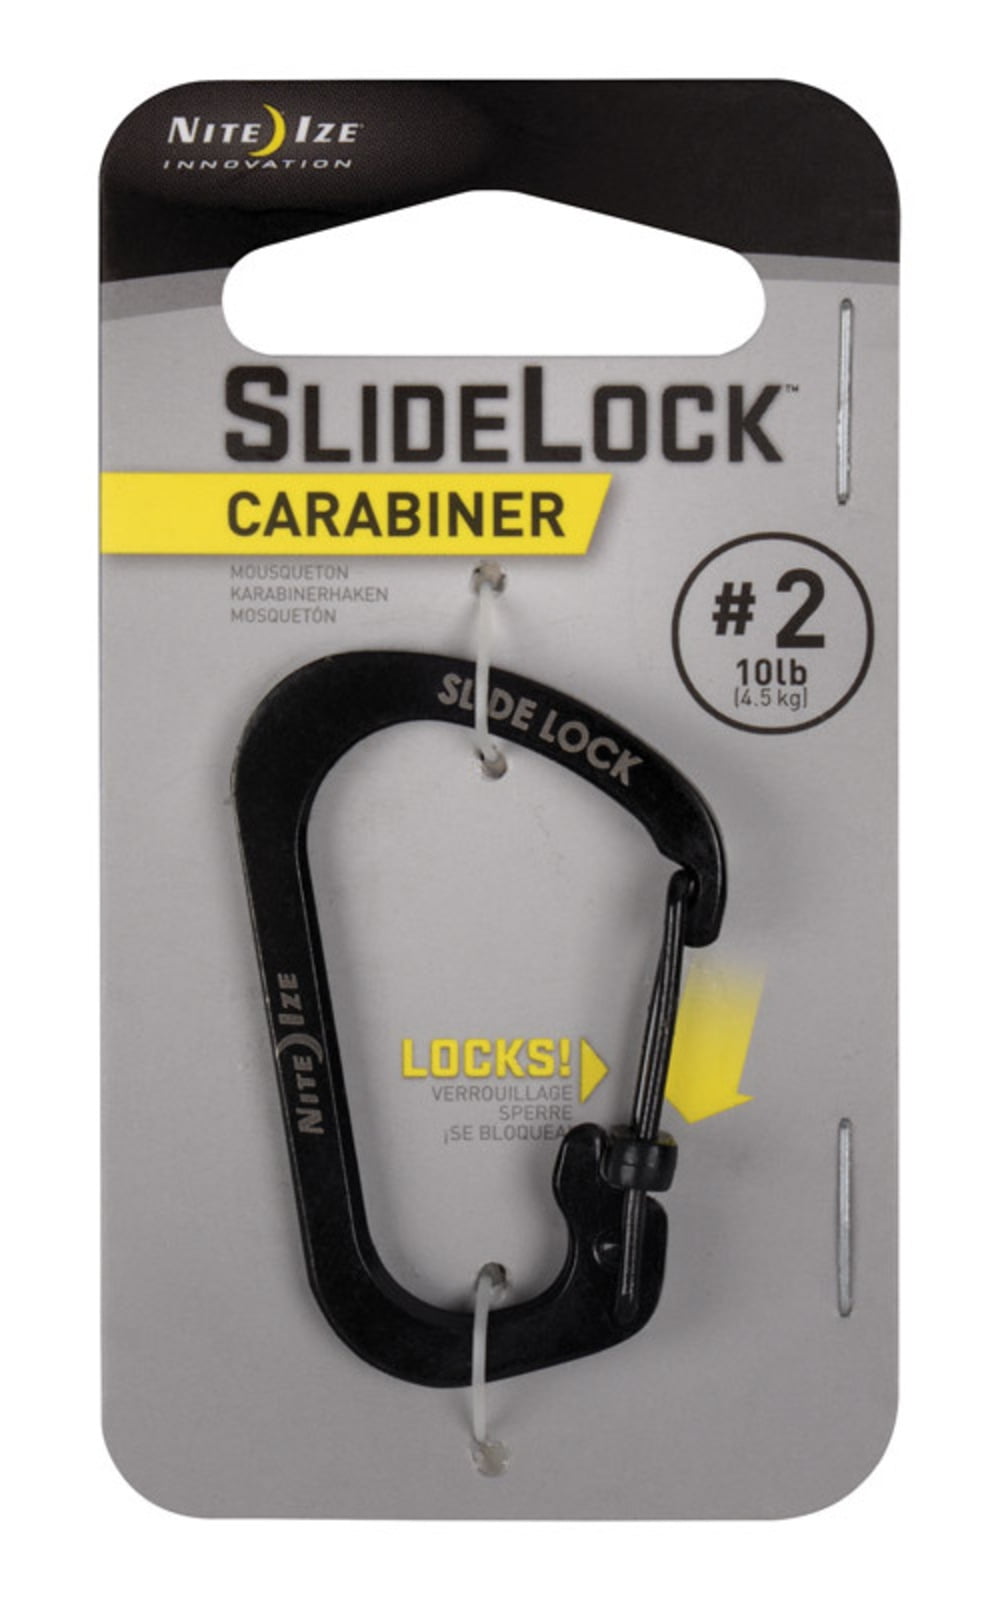 4-Pack of 3 Nite Ize SlideLock Locking Carabiner Set Stainless Steel #2 #3 #4 